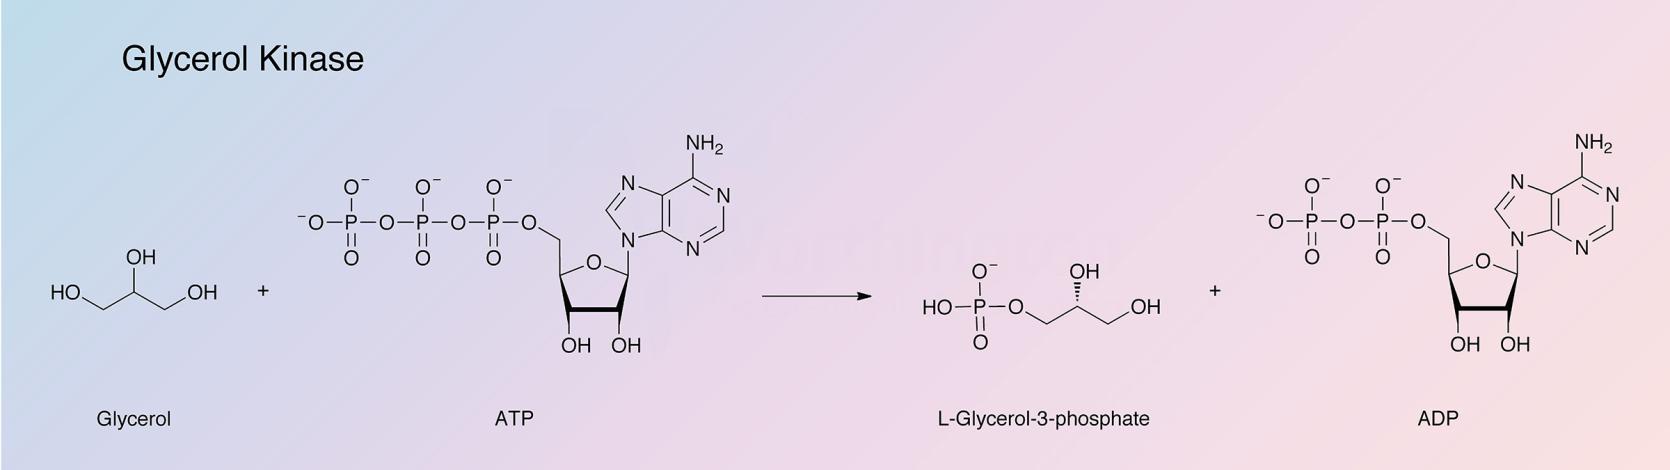 Glycerol Kinase Enzymatic Reaction